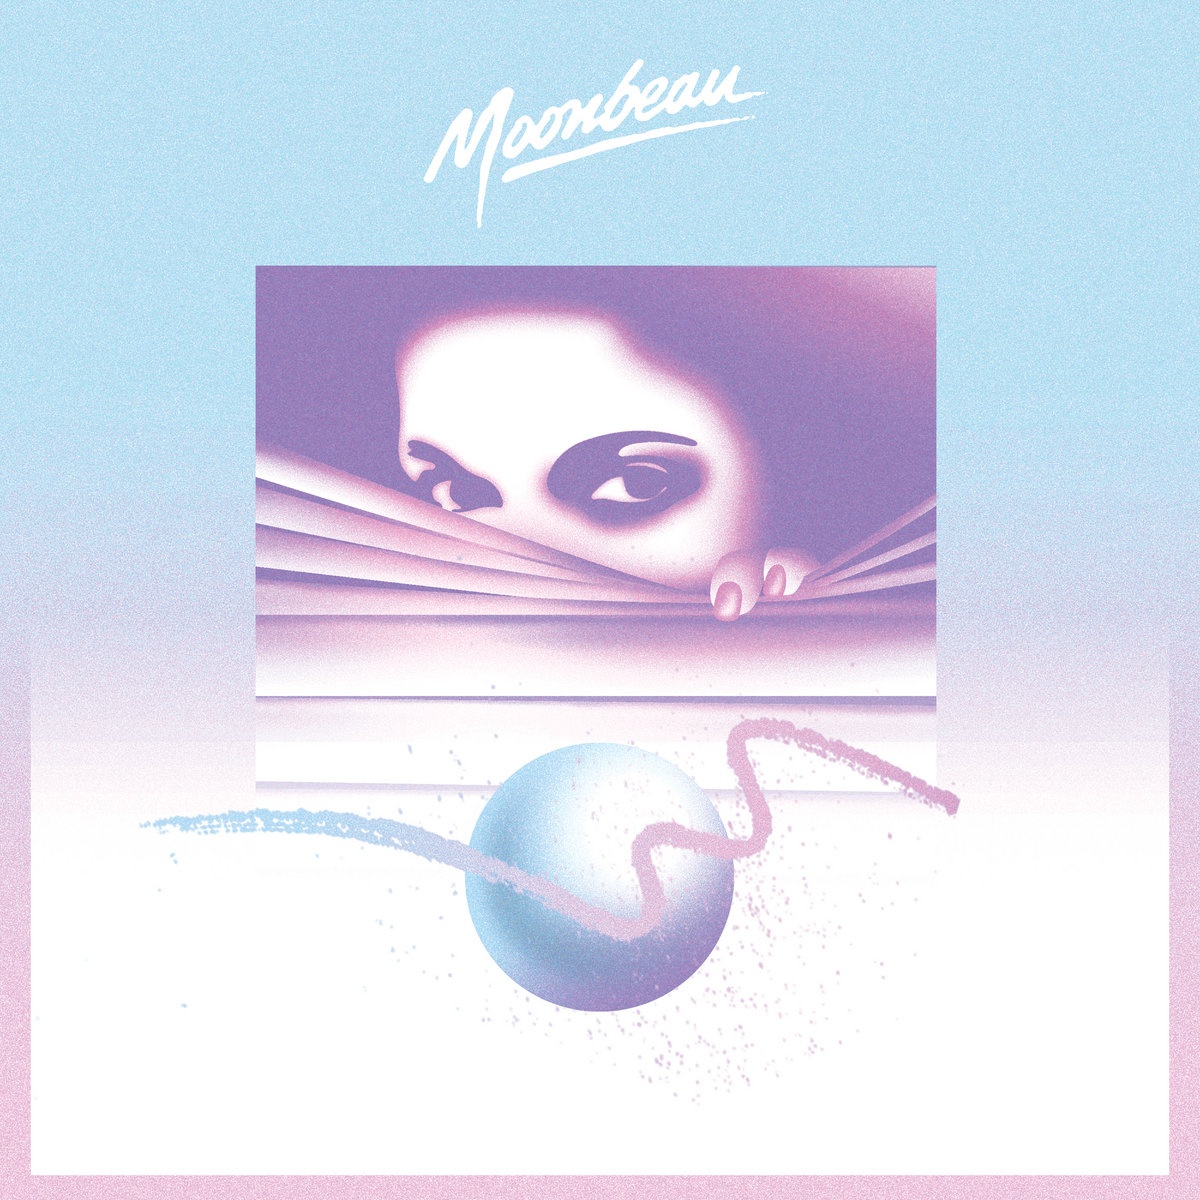 Moonbeau - Moonbeau vinyl cover